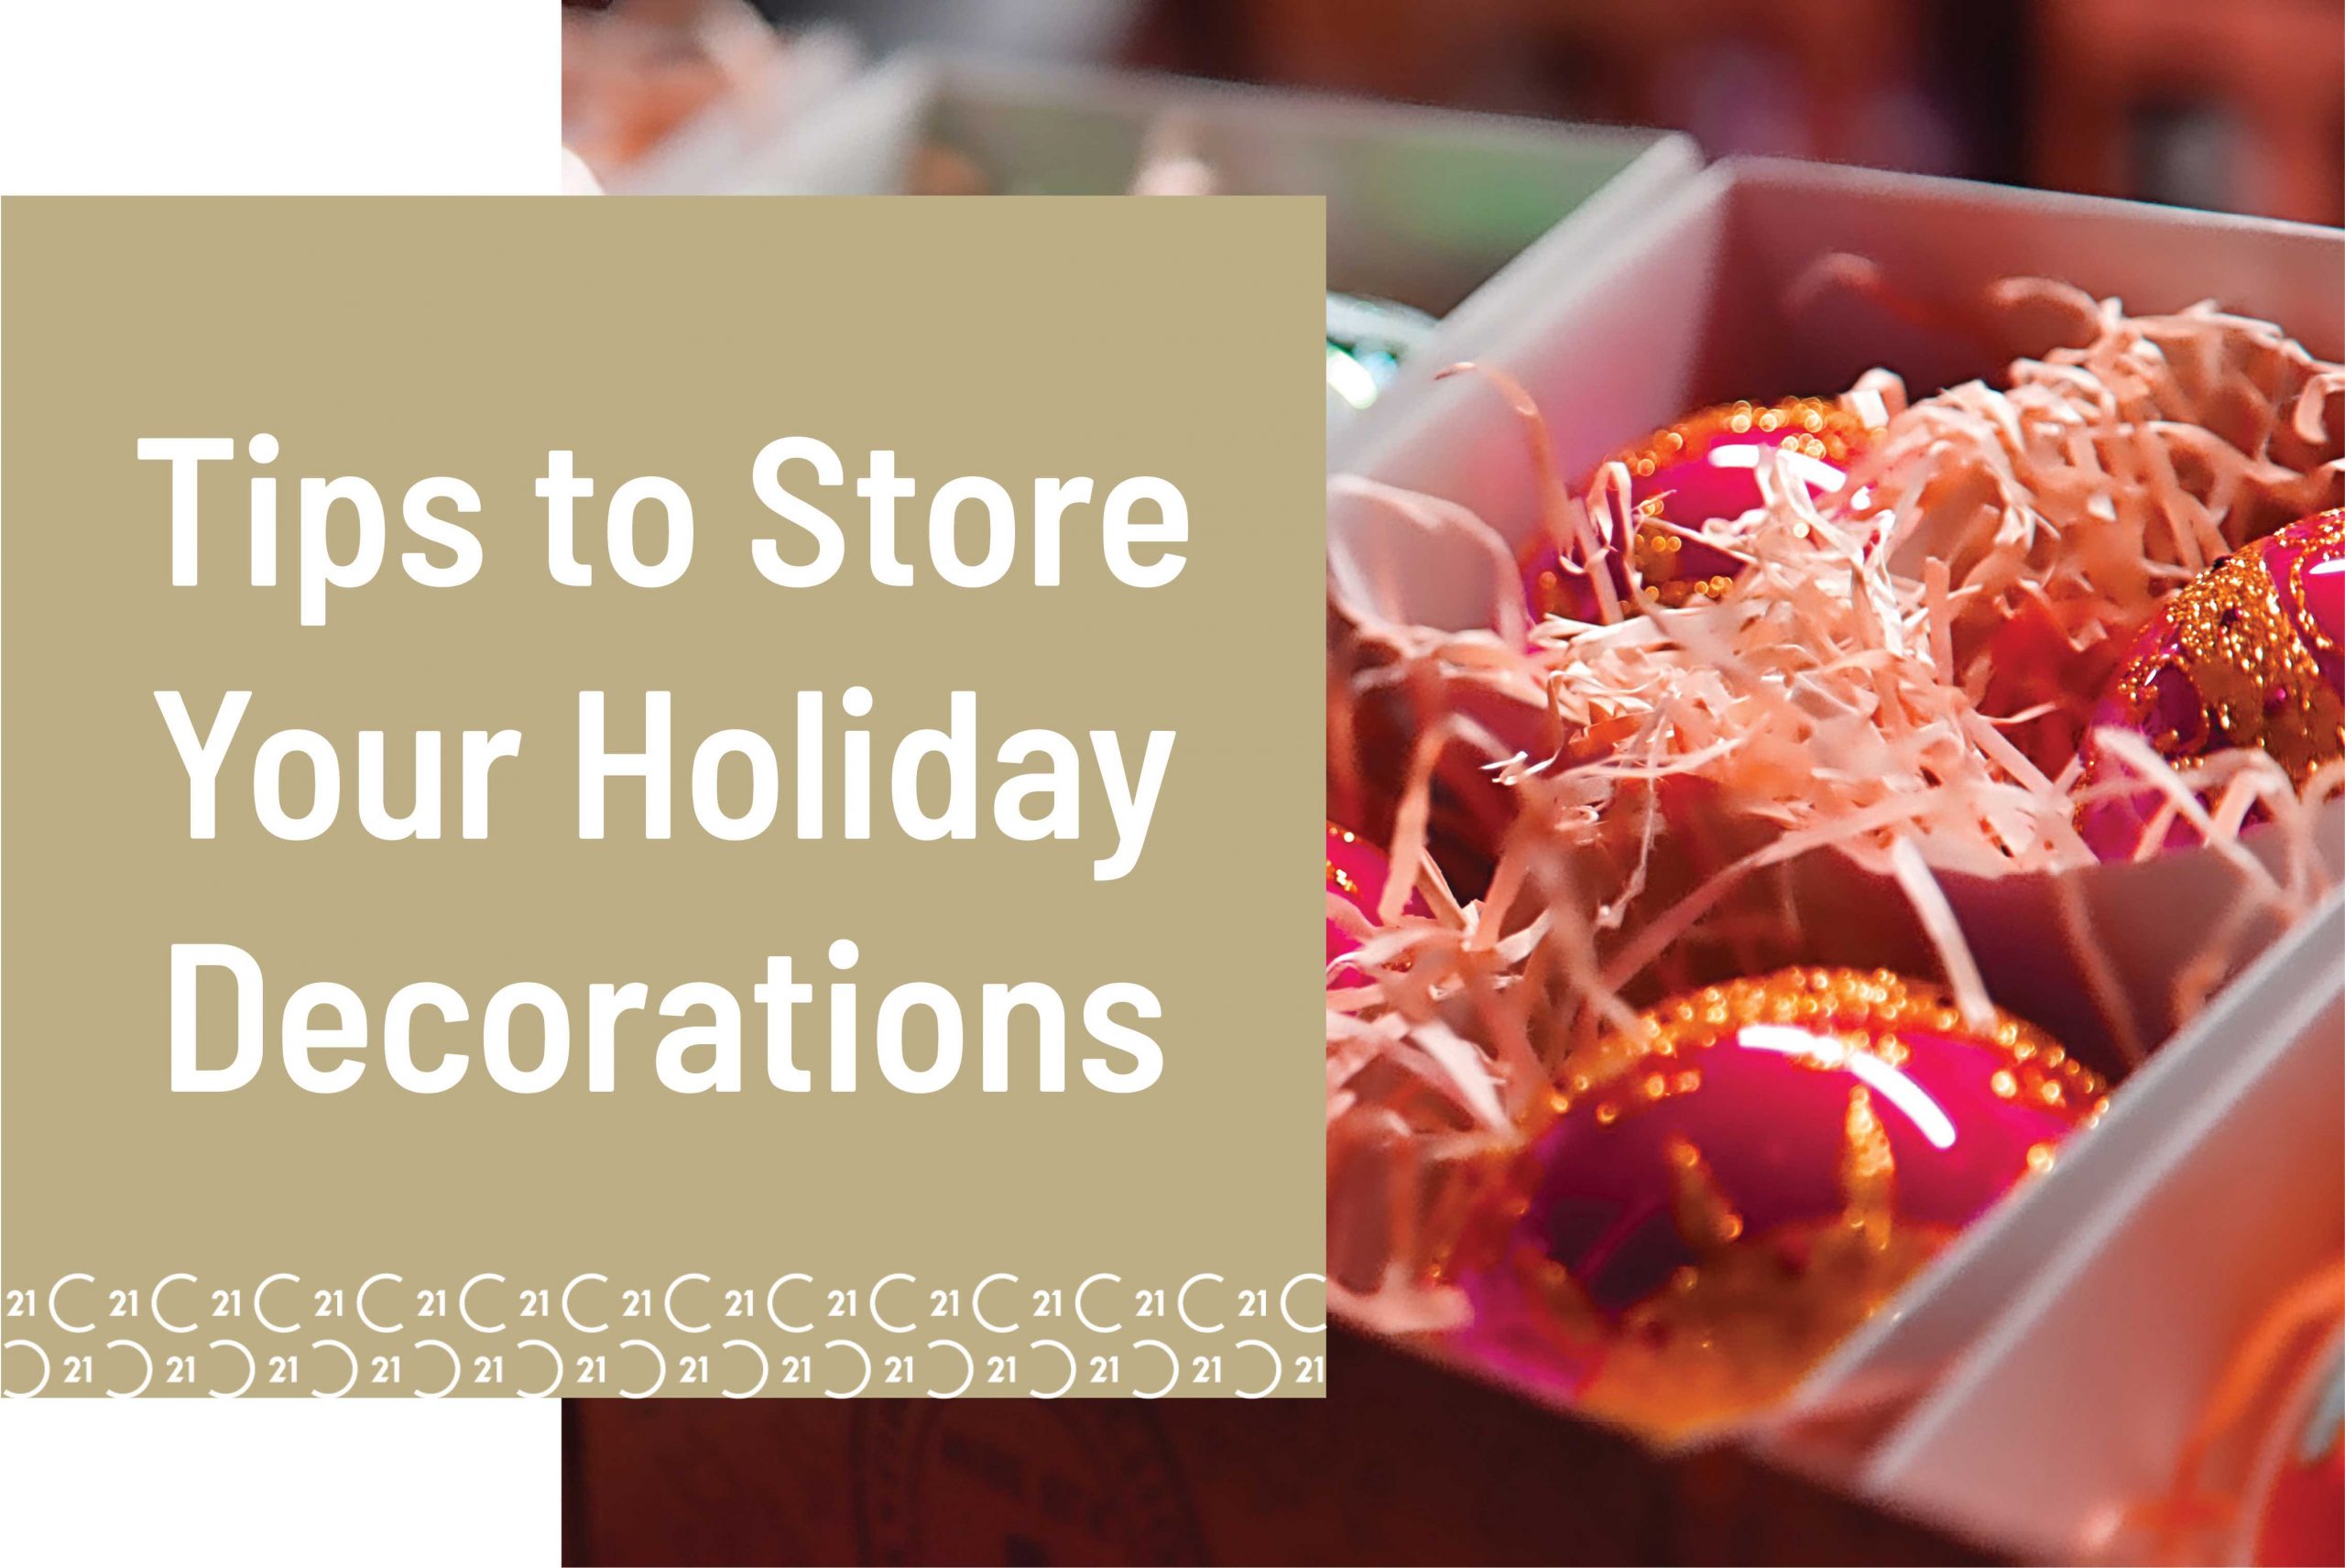 Holiday Decoration Storage